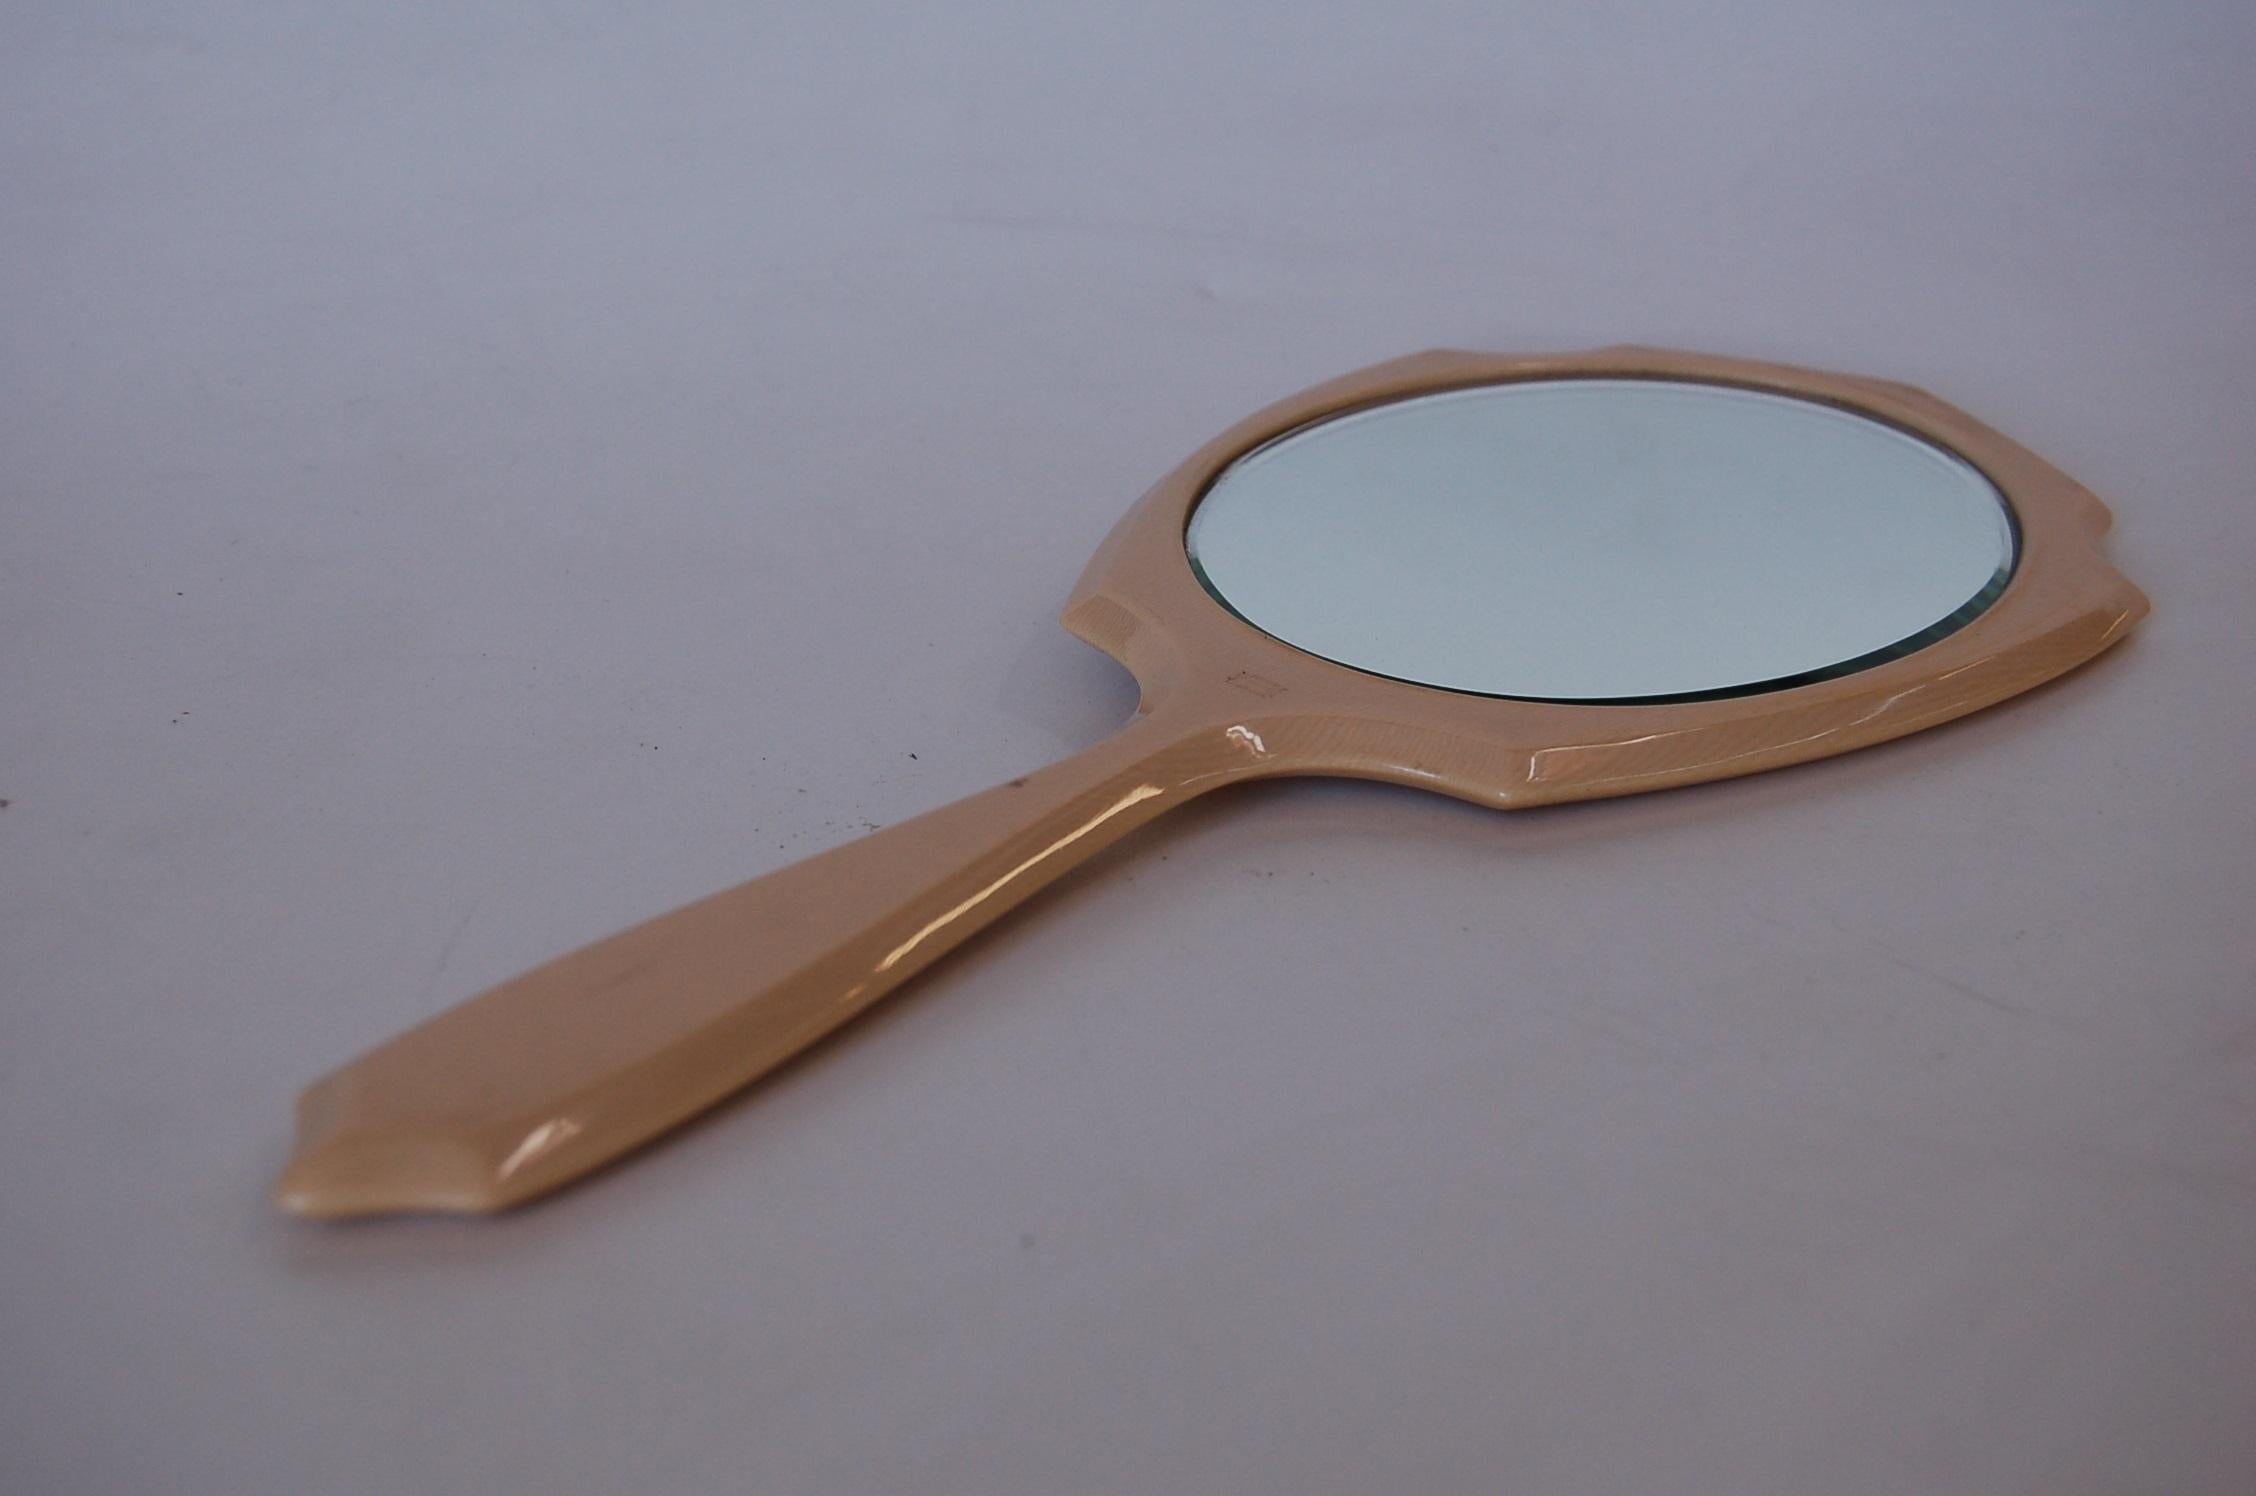 Modernist Art Deco celluloid vanity hand mirror.

Measures 18